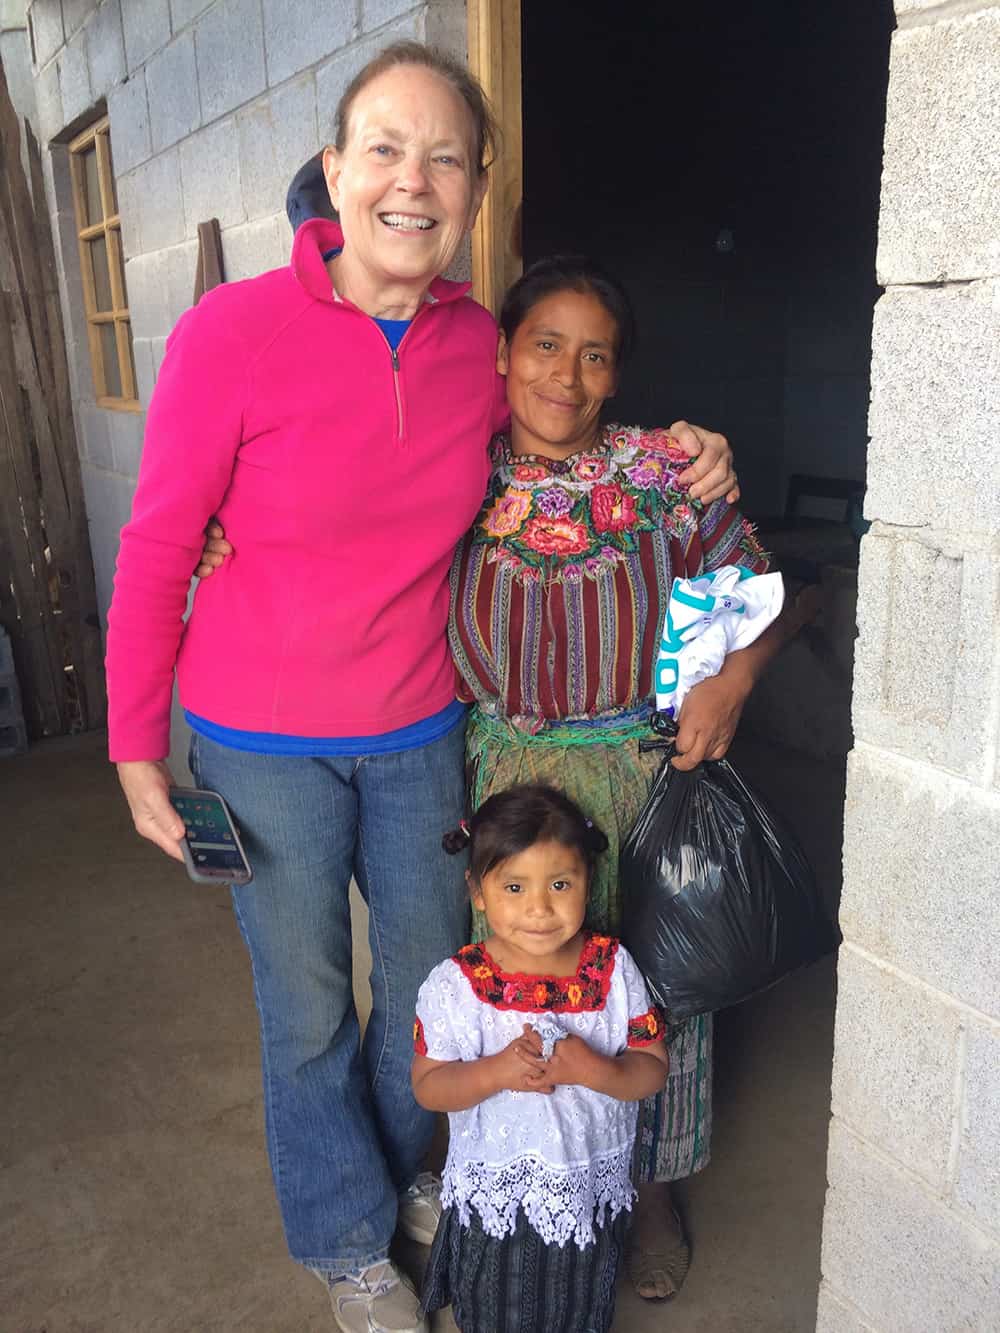 Nancy with family in Guatemala. Photo by Nancy Becker.